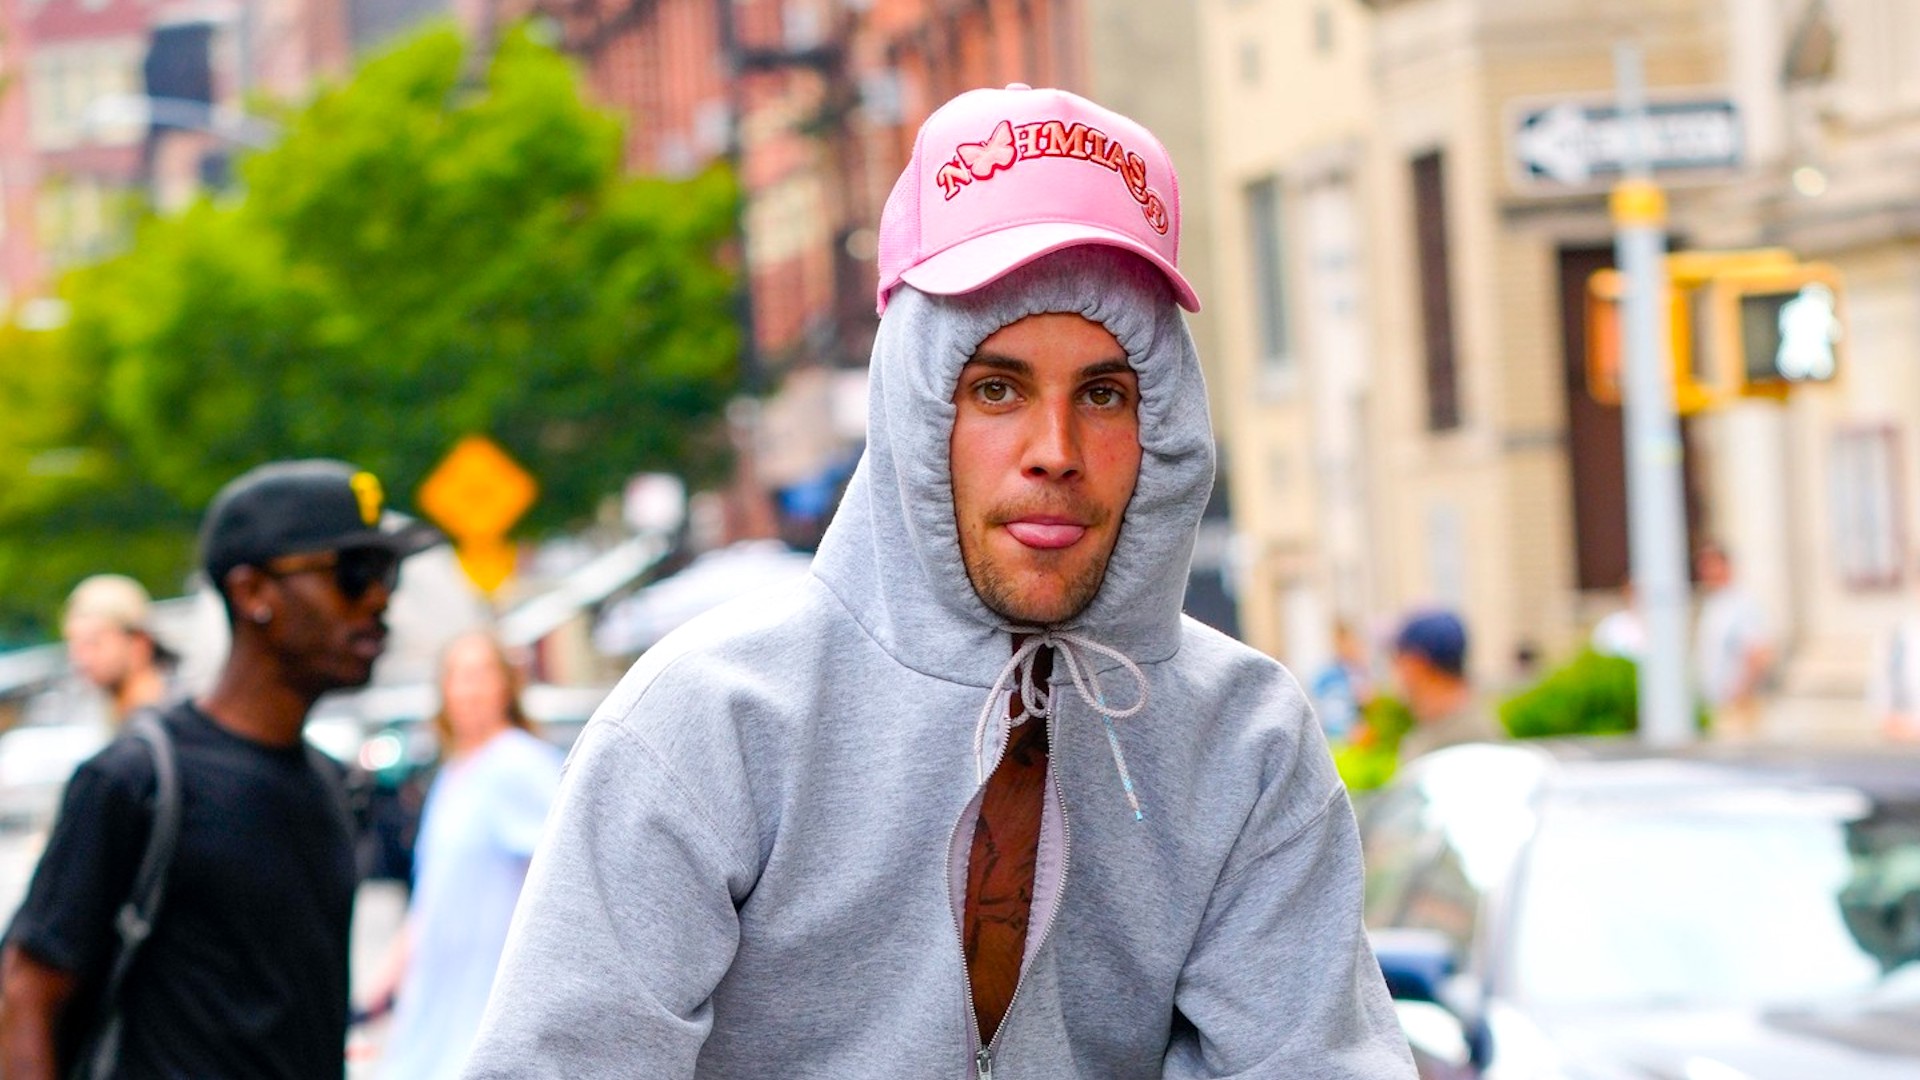 Justin Bieber's 'Hat Over Hoodie' Look Kickstarts Ridiculous New